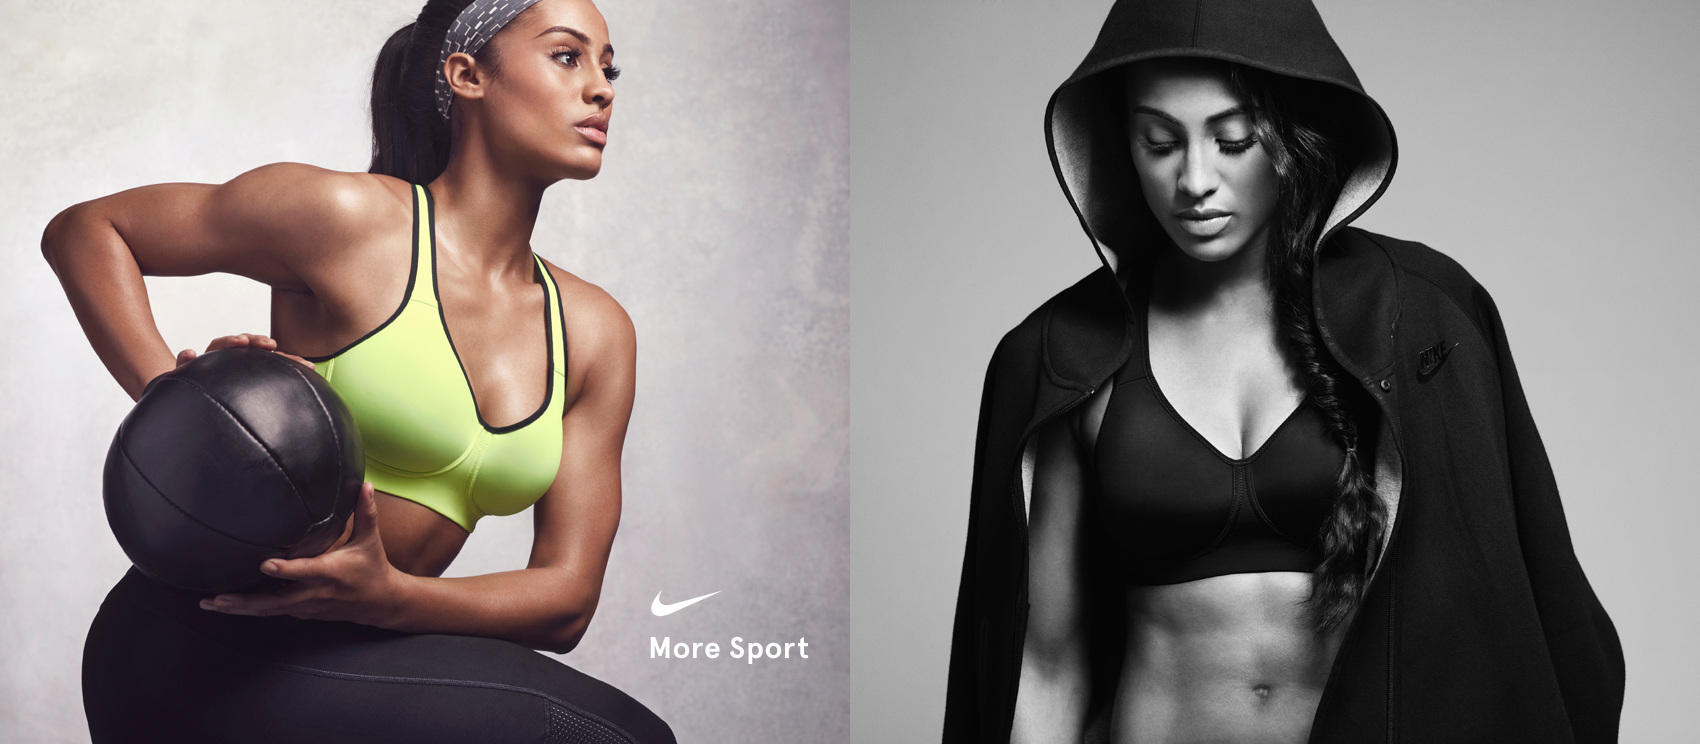 GigaSports - Nike Pro Rival Women's Sports Bra